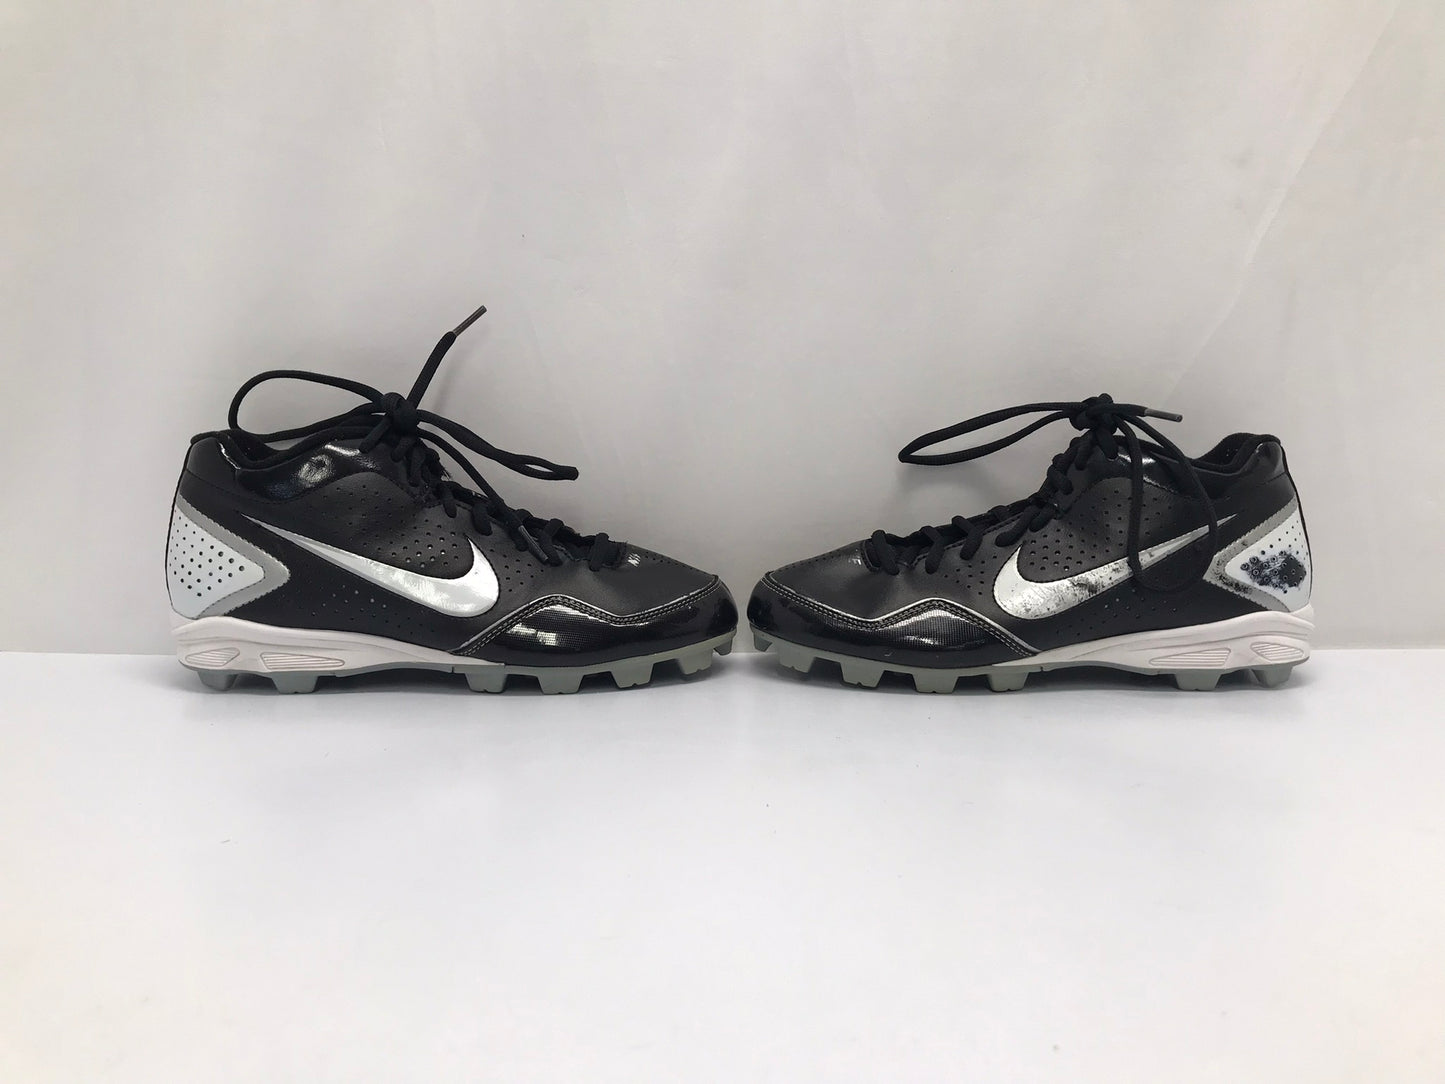 Baseball Shoes Cleats Men's Size 6.5 Nike Black White Some Marks